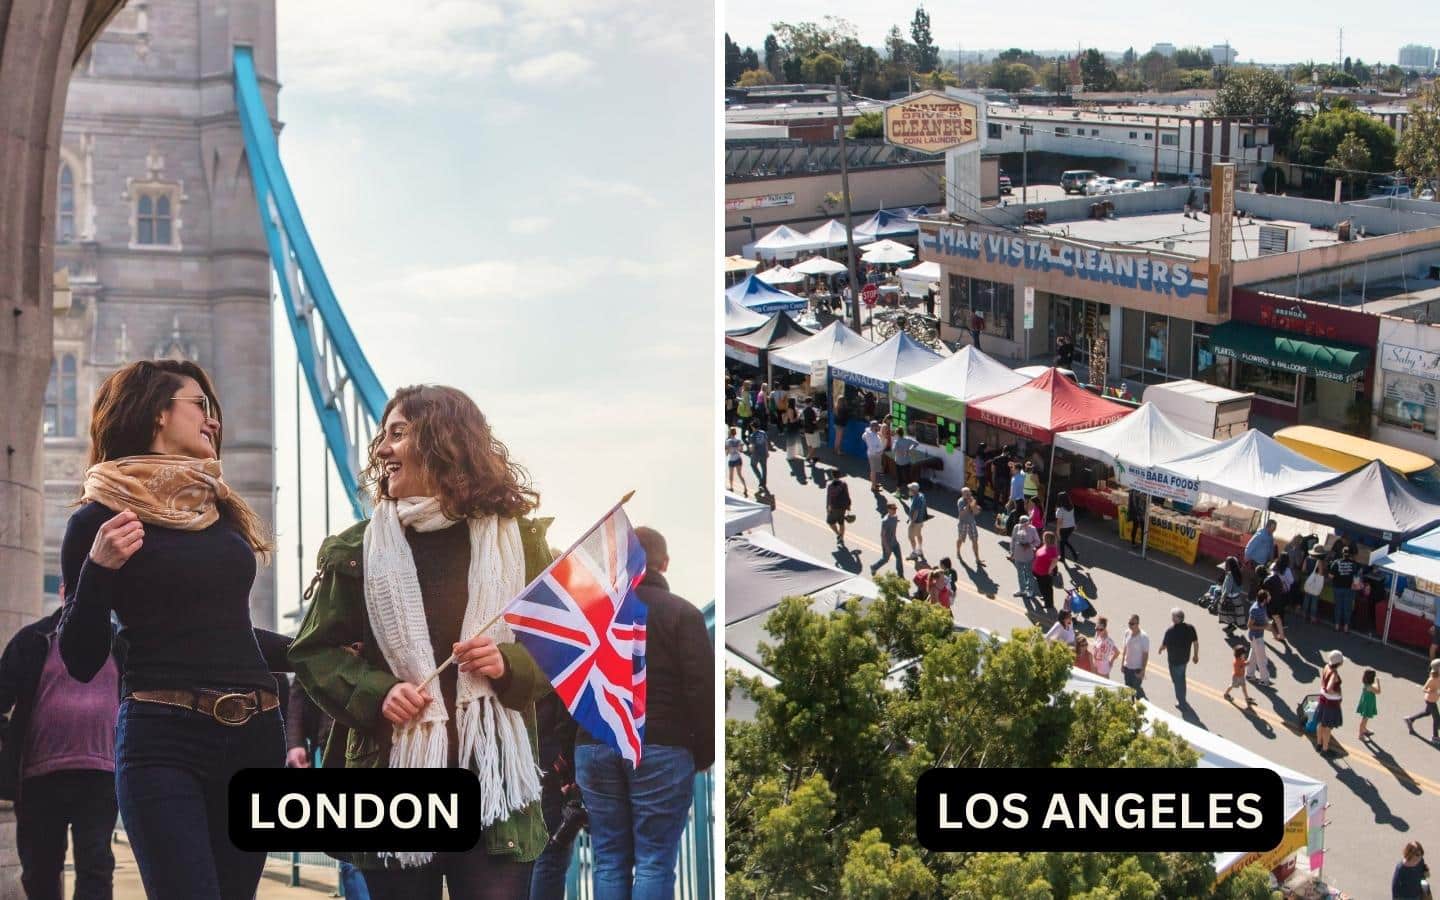 London Vs Los Angeles culture